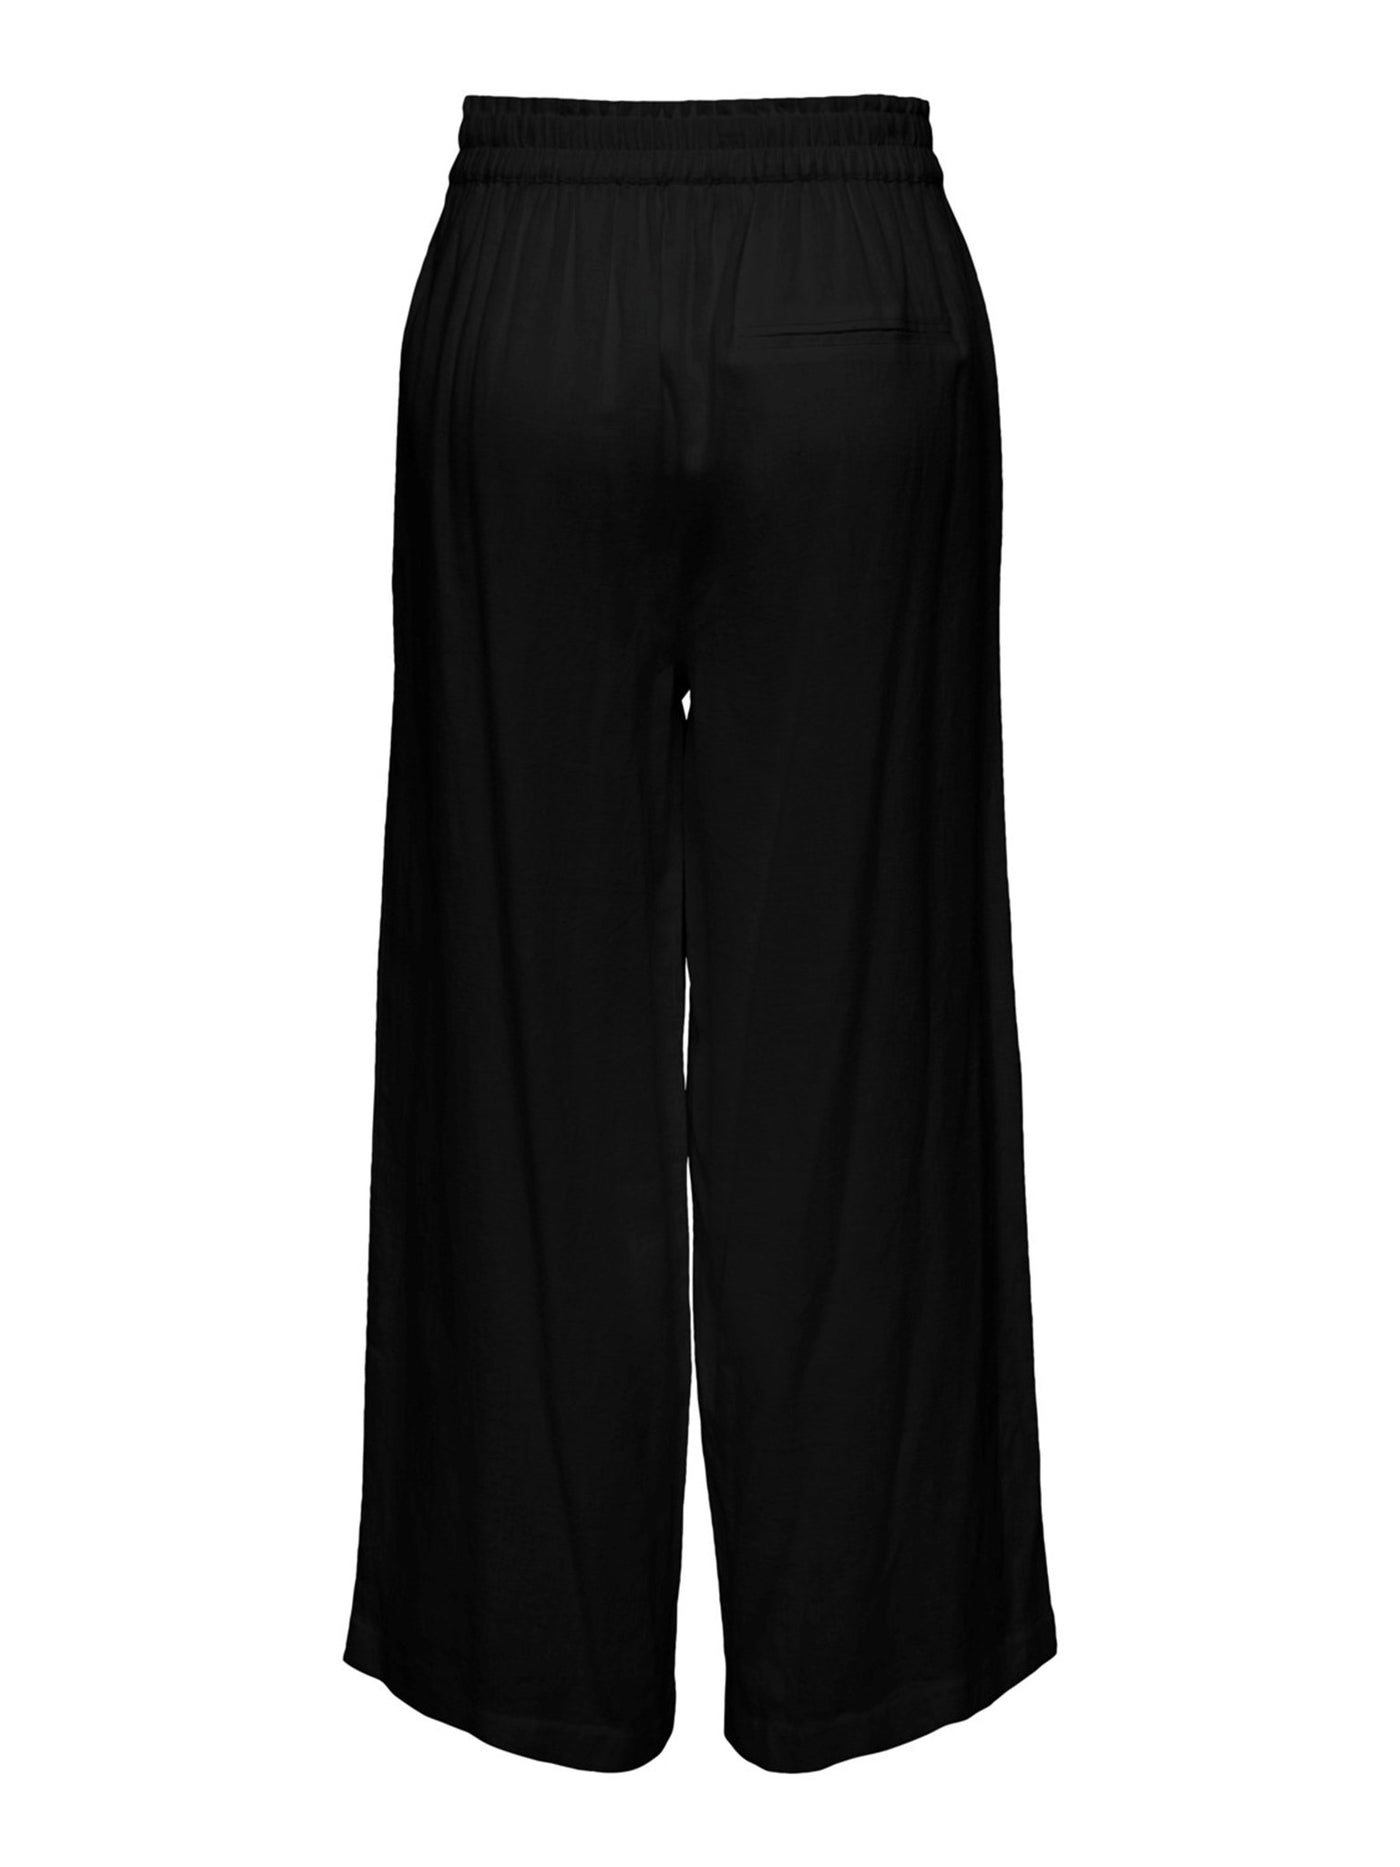 Tokyo High Waist Linen Trousers - Black - ONLY - Black 2